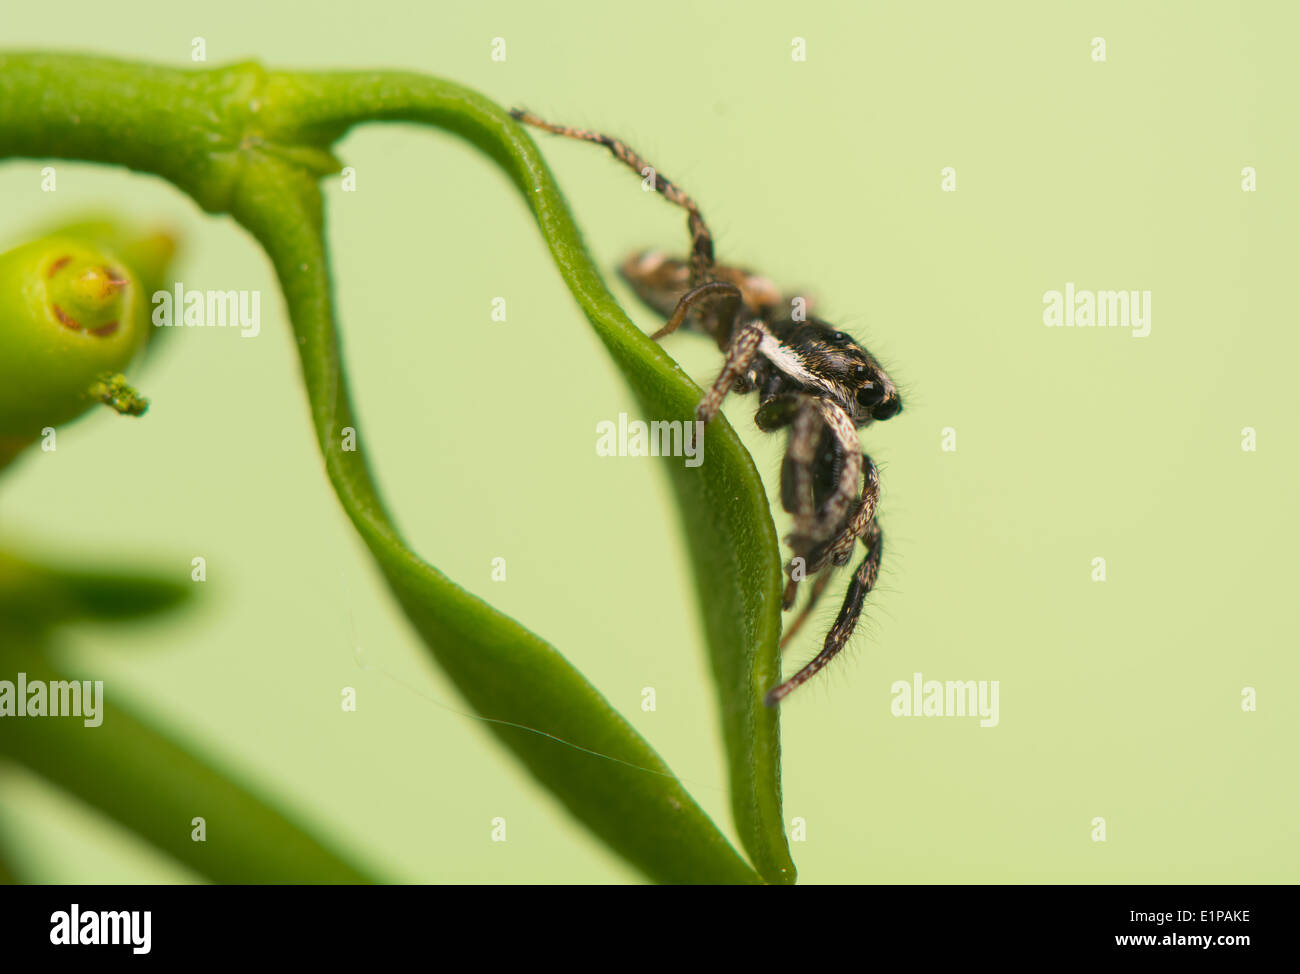 Jumping spider - Salticus scenicus Stock Photo